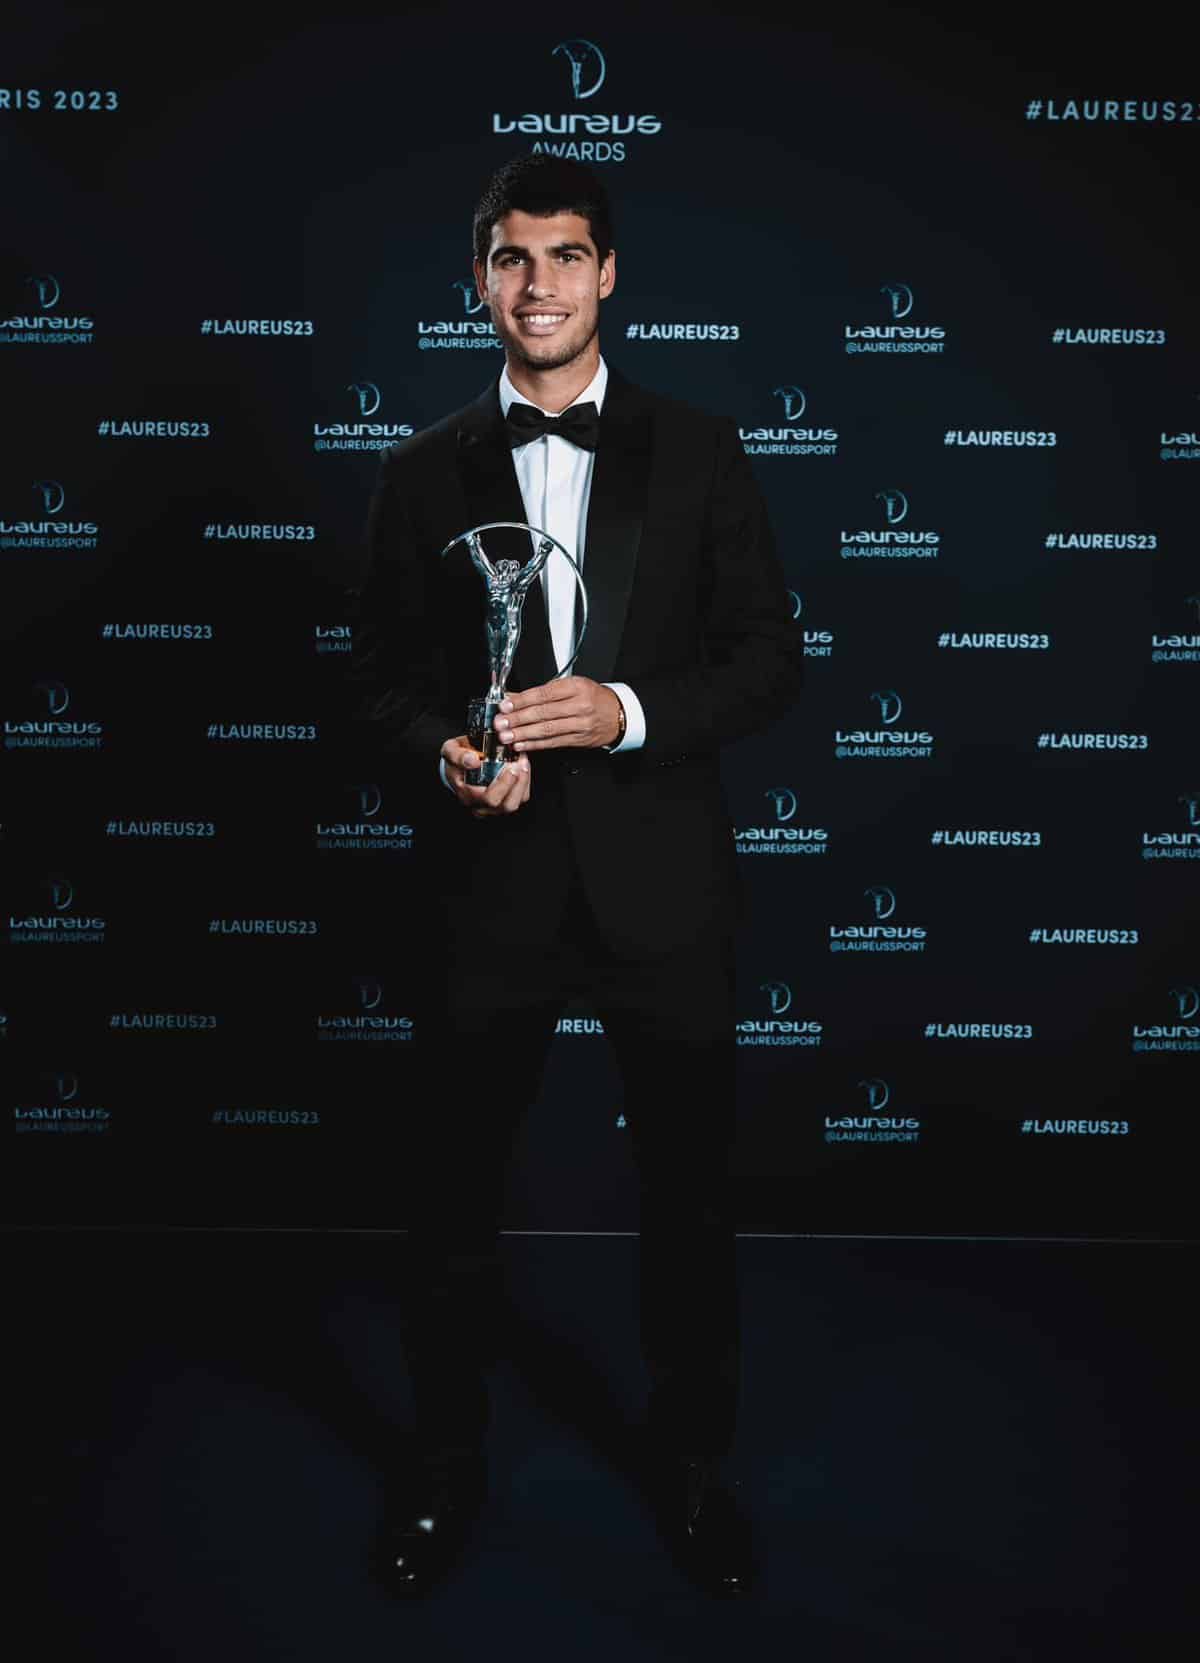 Tennis Phenom Carlos Alcaraz Latest Louis Vuitton Ambassador